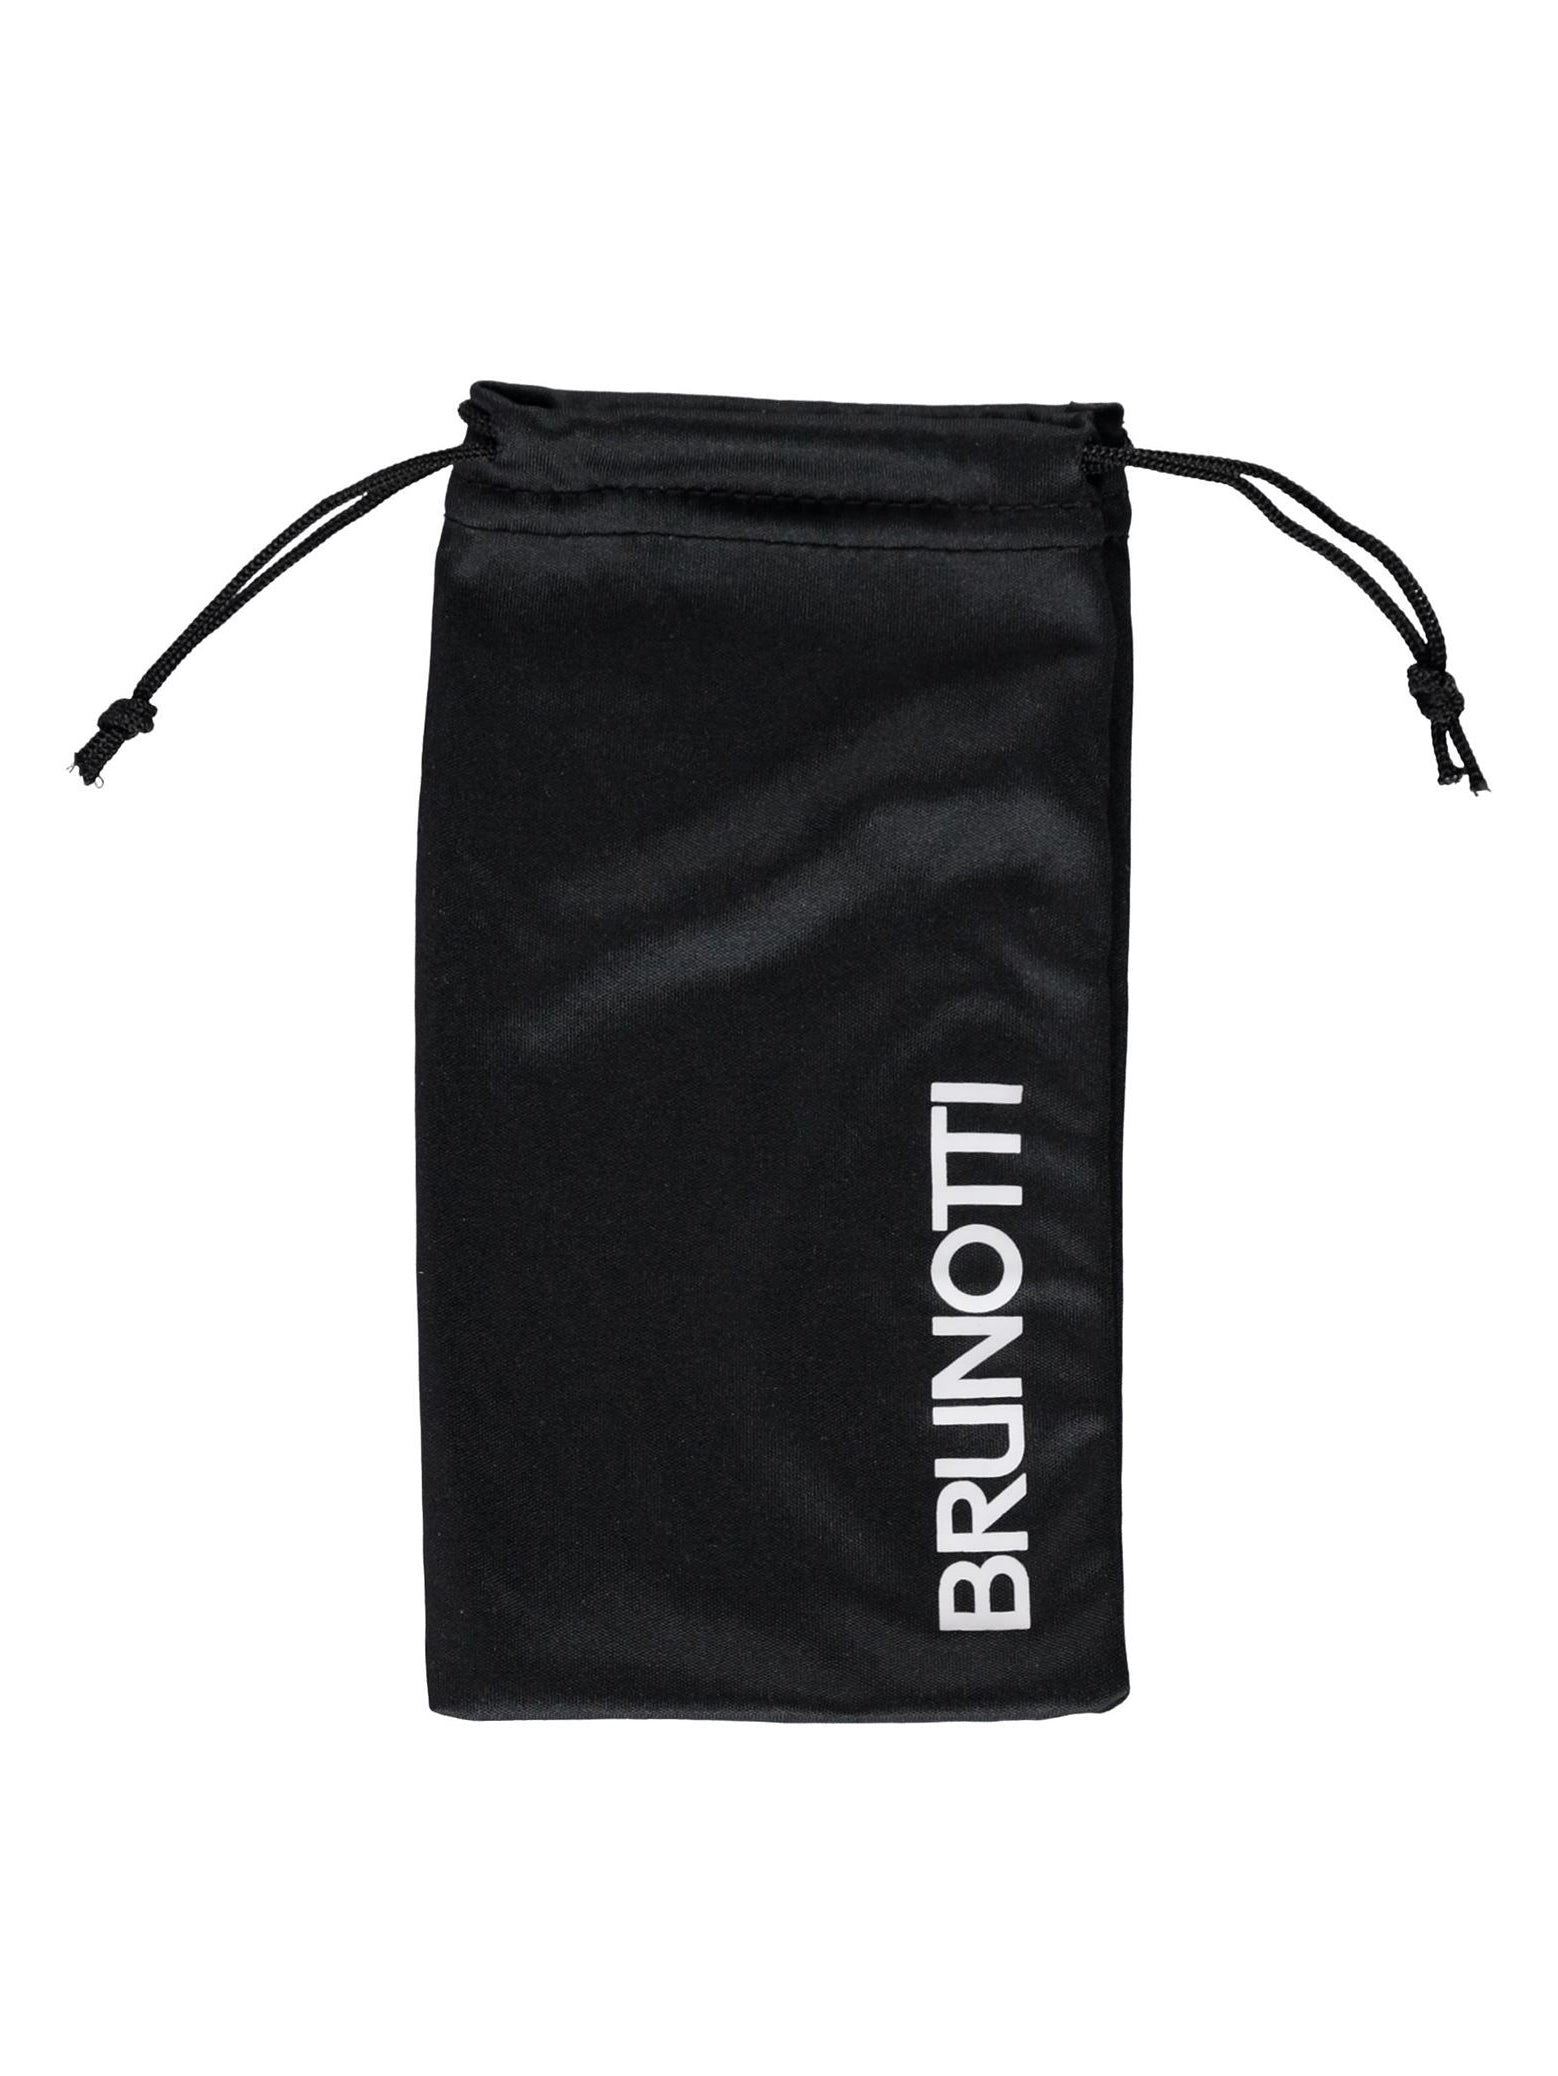 Banyoles-1 Unisex Sunglasses | Brown